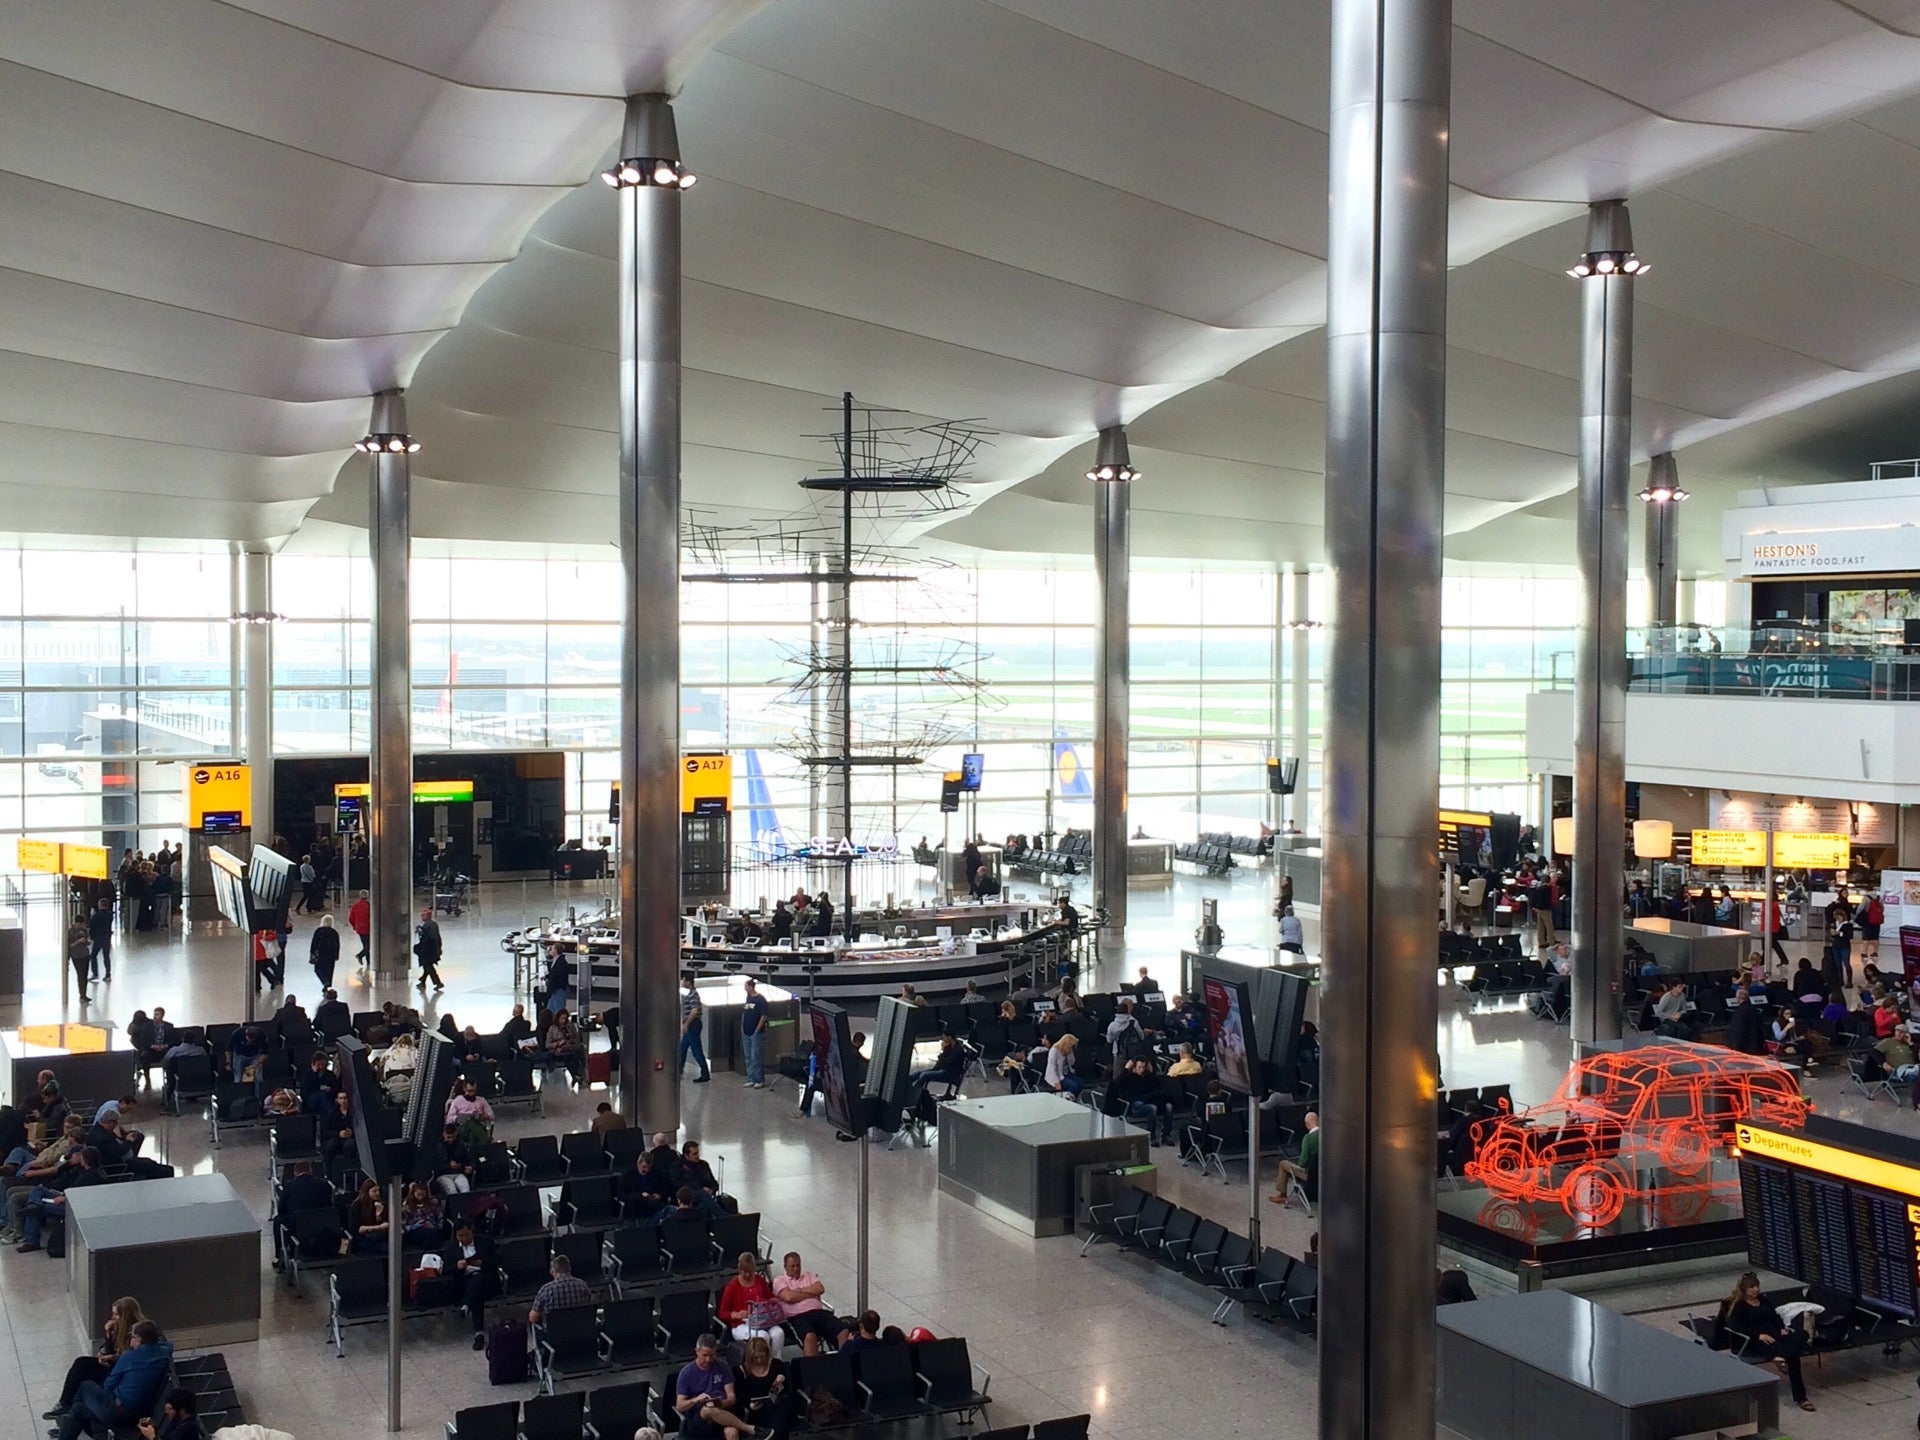 London Heathrow Airport (LHR) (London Heathrow Airport)